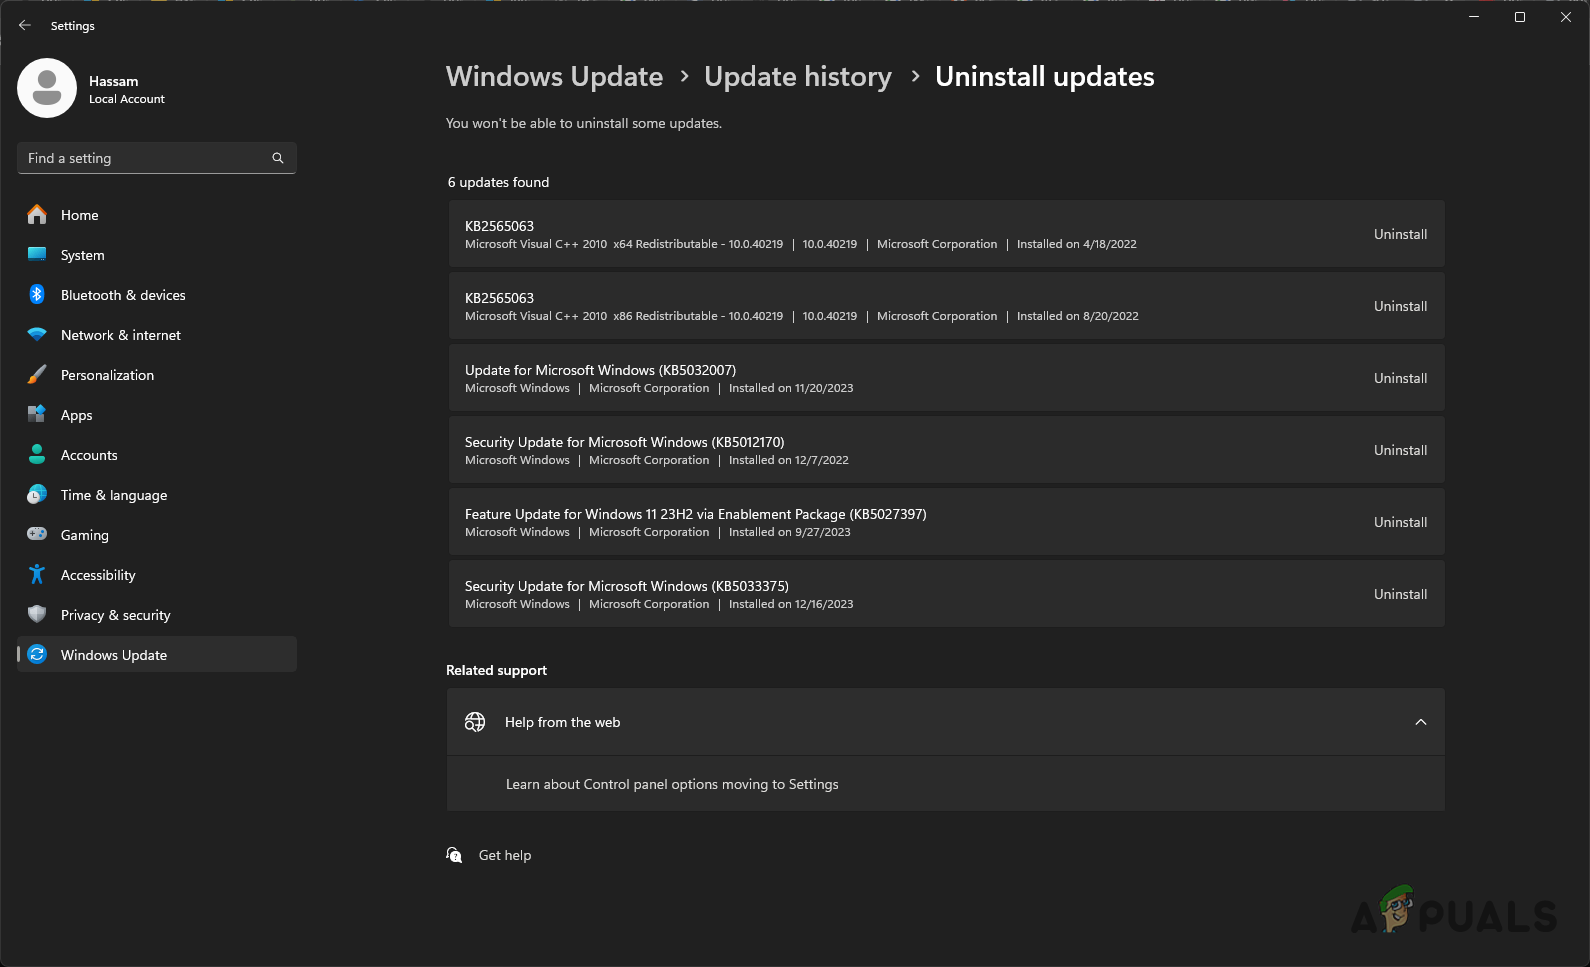 Uninstalling Windows Update